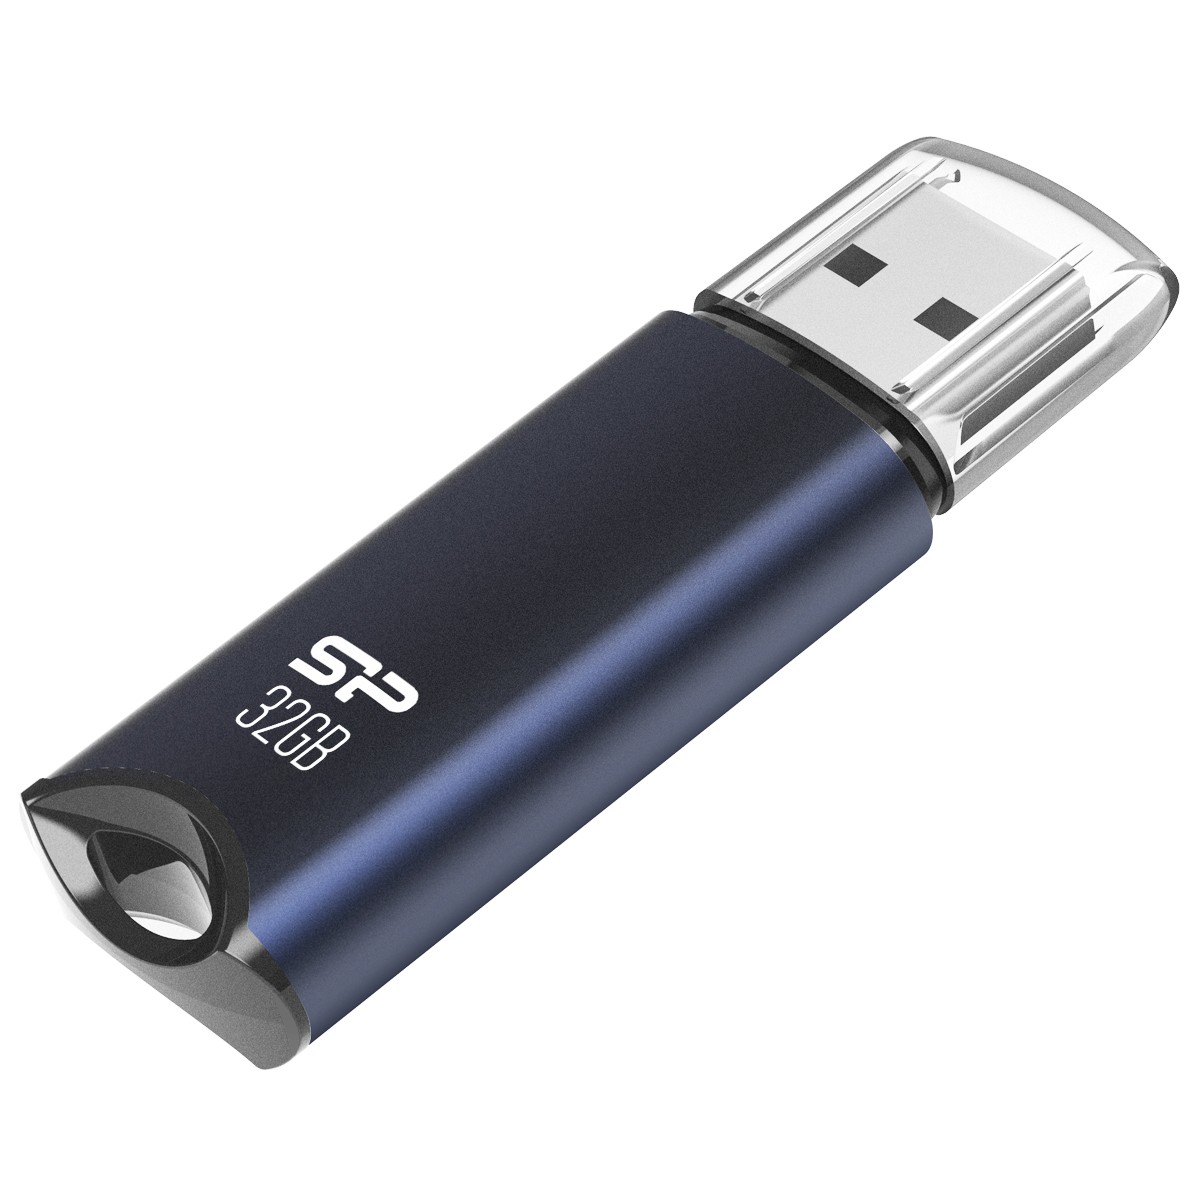 Silicon Power 32GB Marvel M02 USB 3.0 Flash Drive - Navy Blue